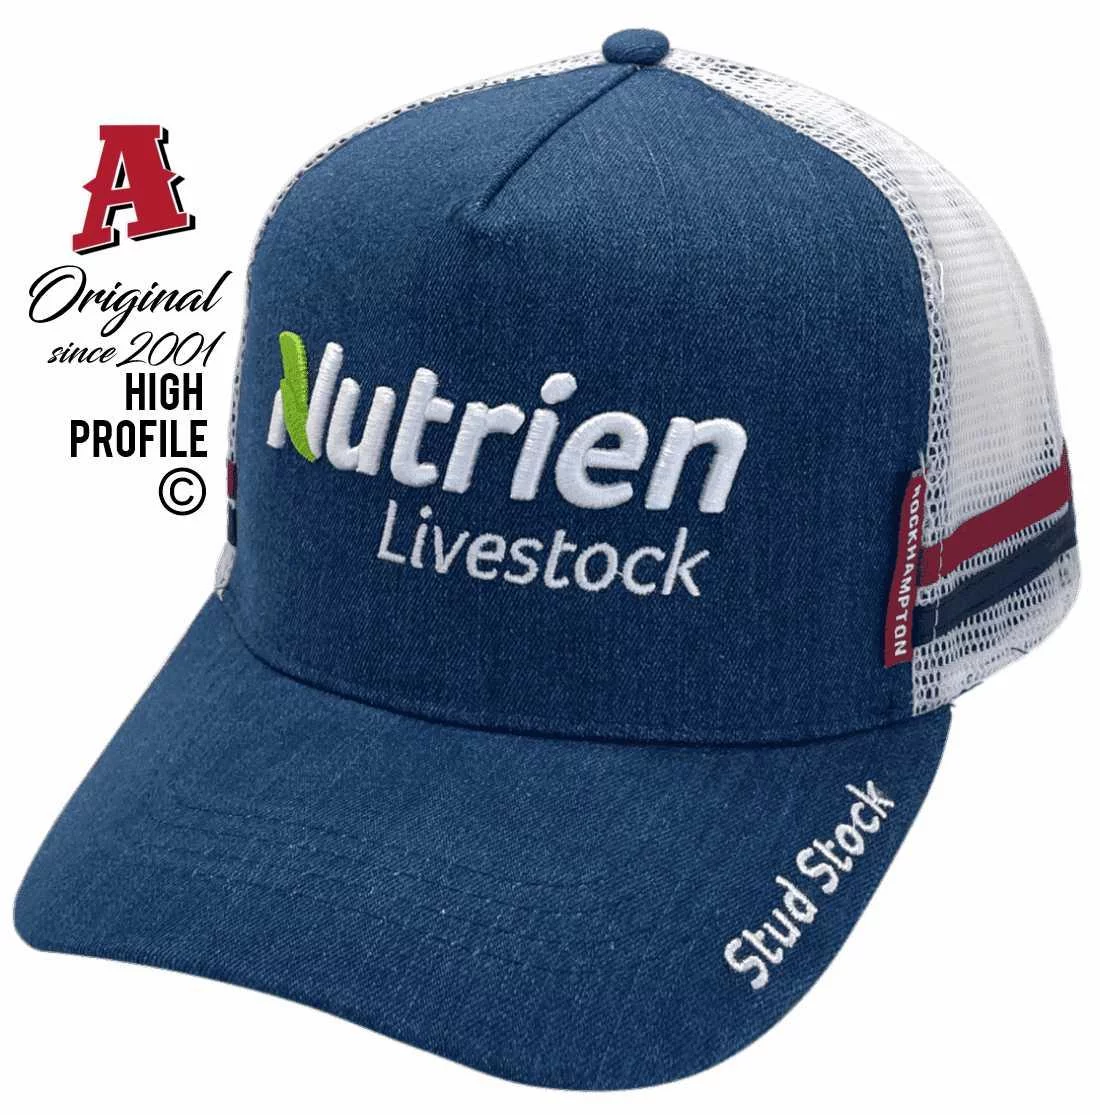 Nutrien Livestock Rockhampton QLD Stud Stock Midrange Aussie Trucker Hats HeadFit Crown Denim 3d embroidery Snapback